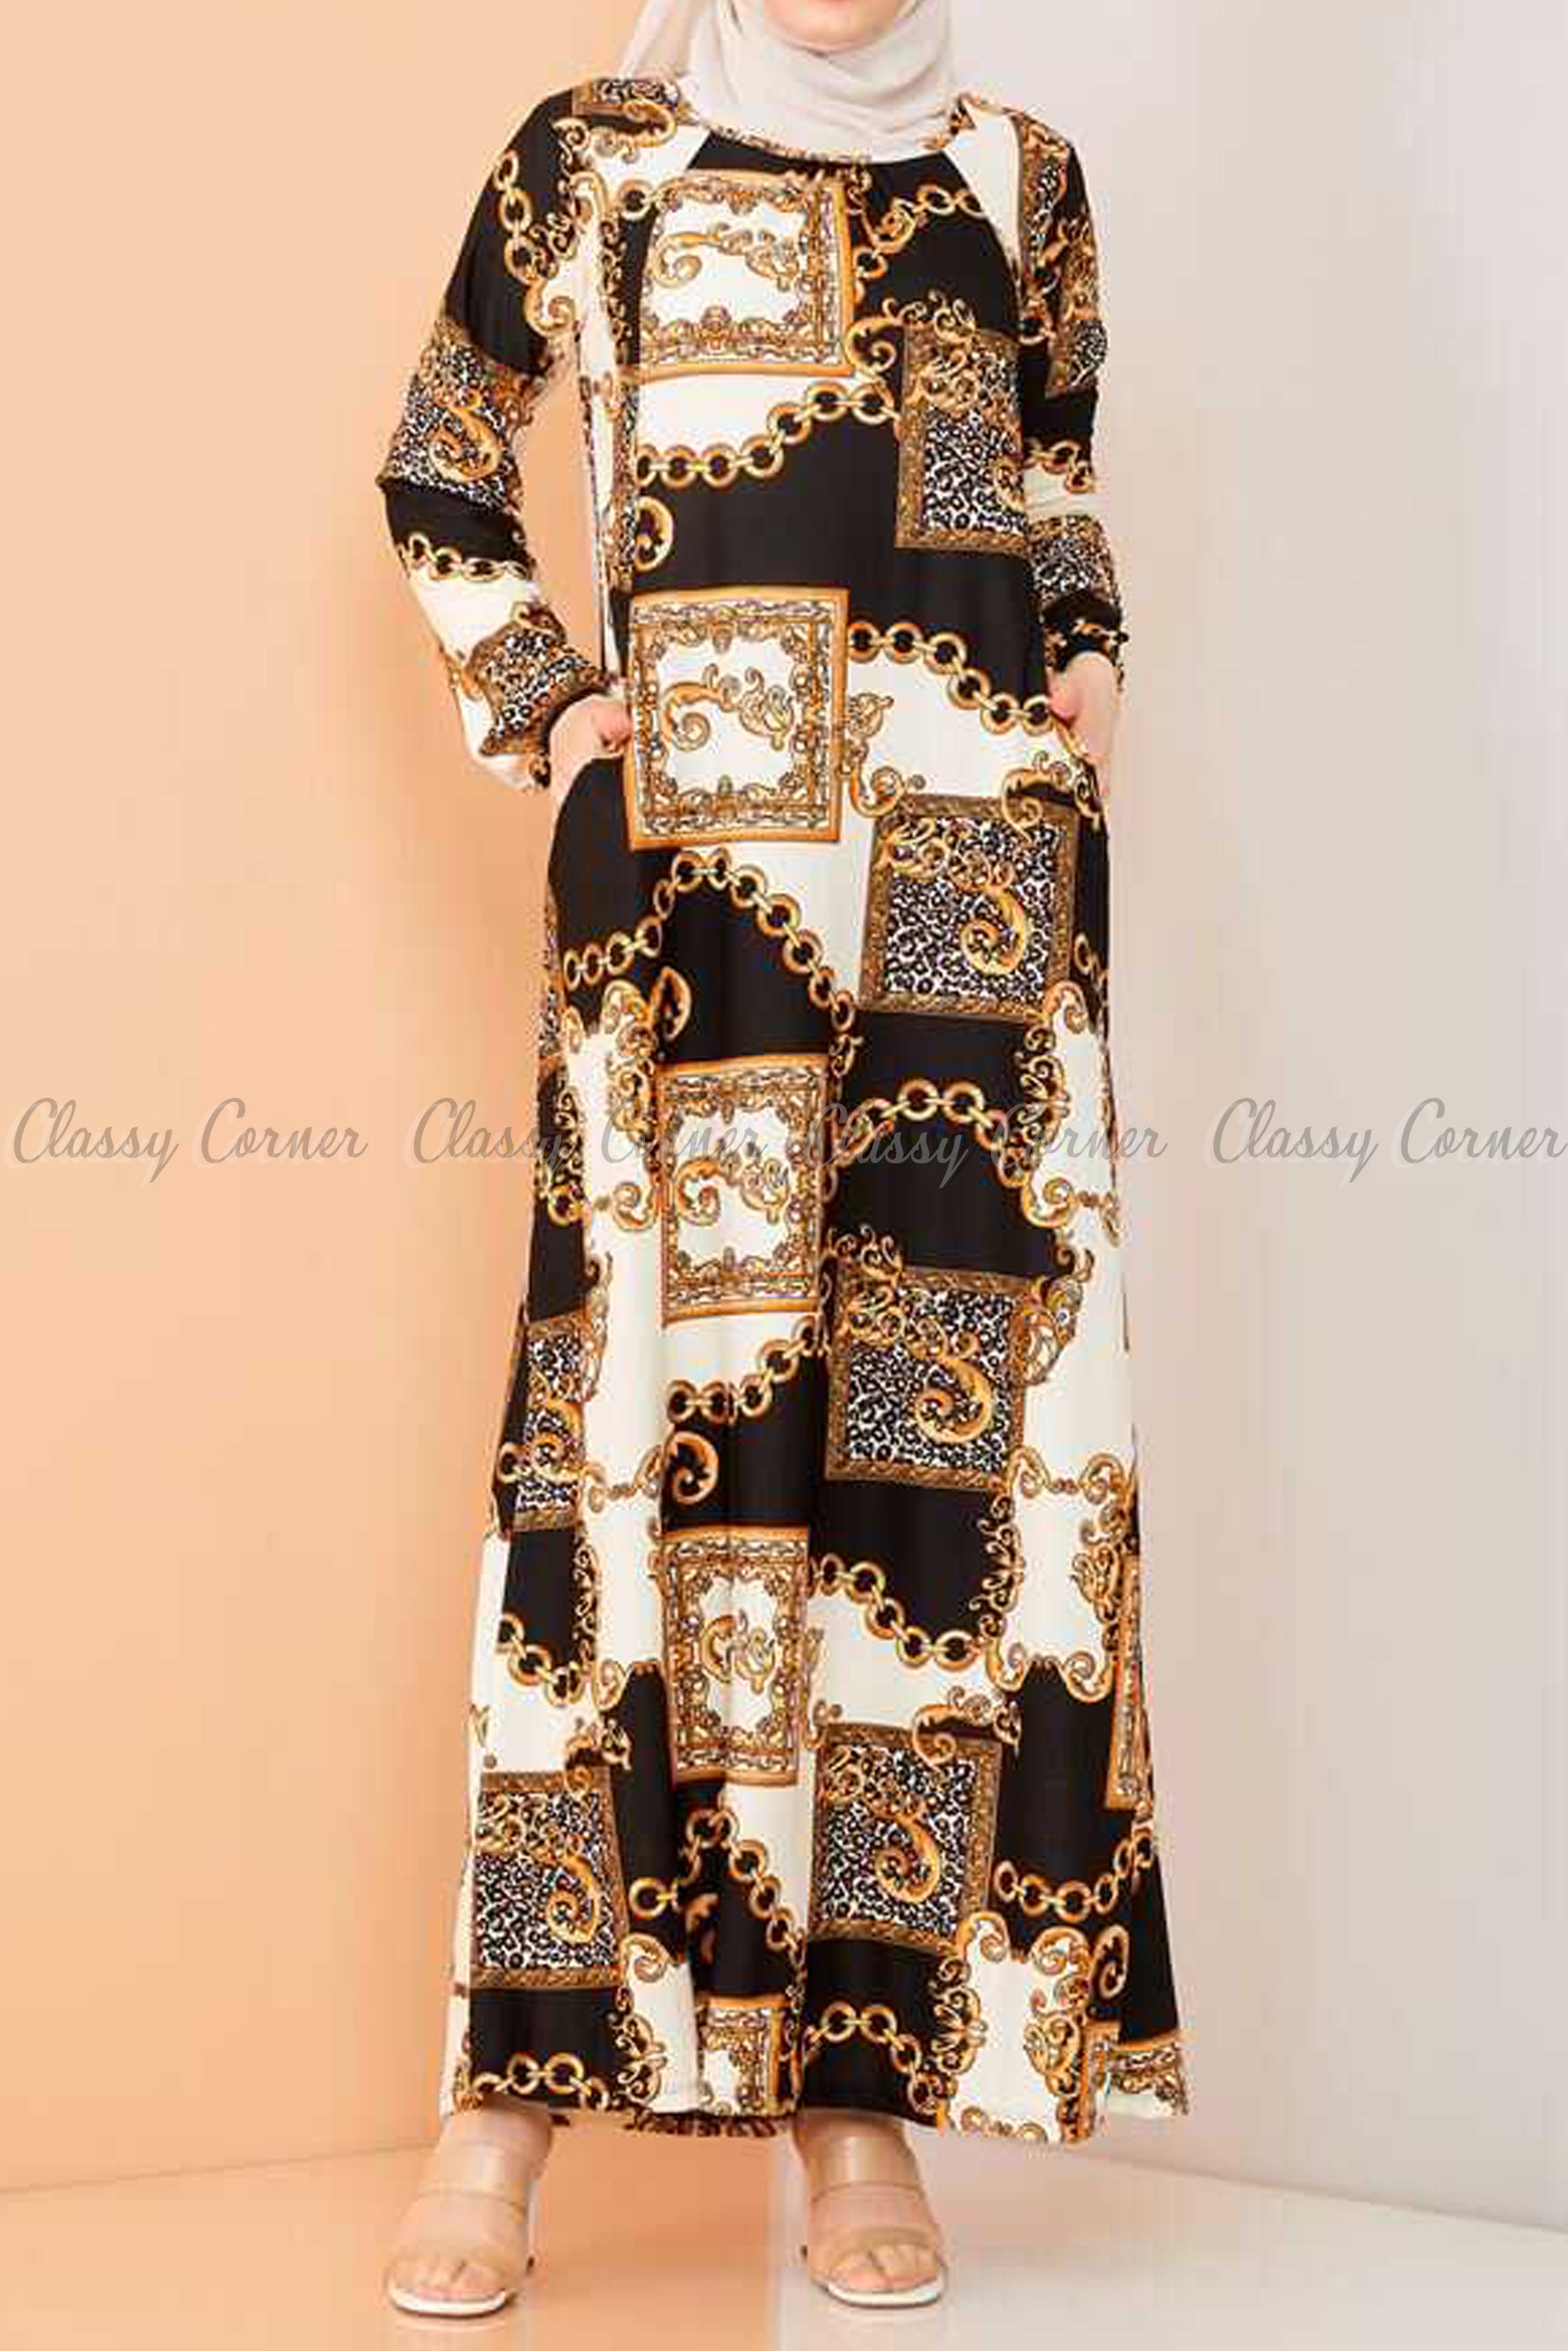 Royal Chain Print Black and White Modest Long Dress